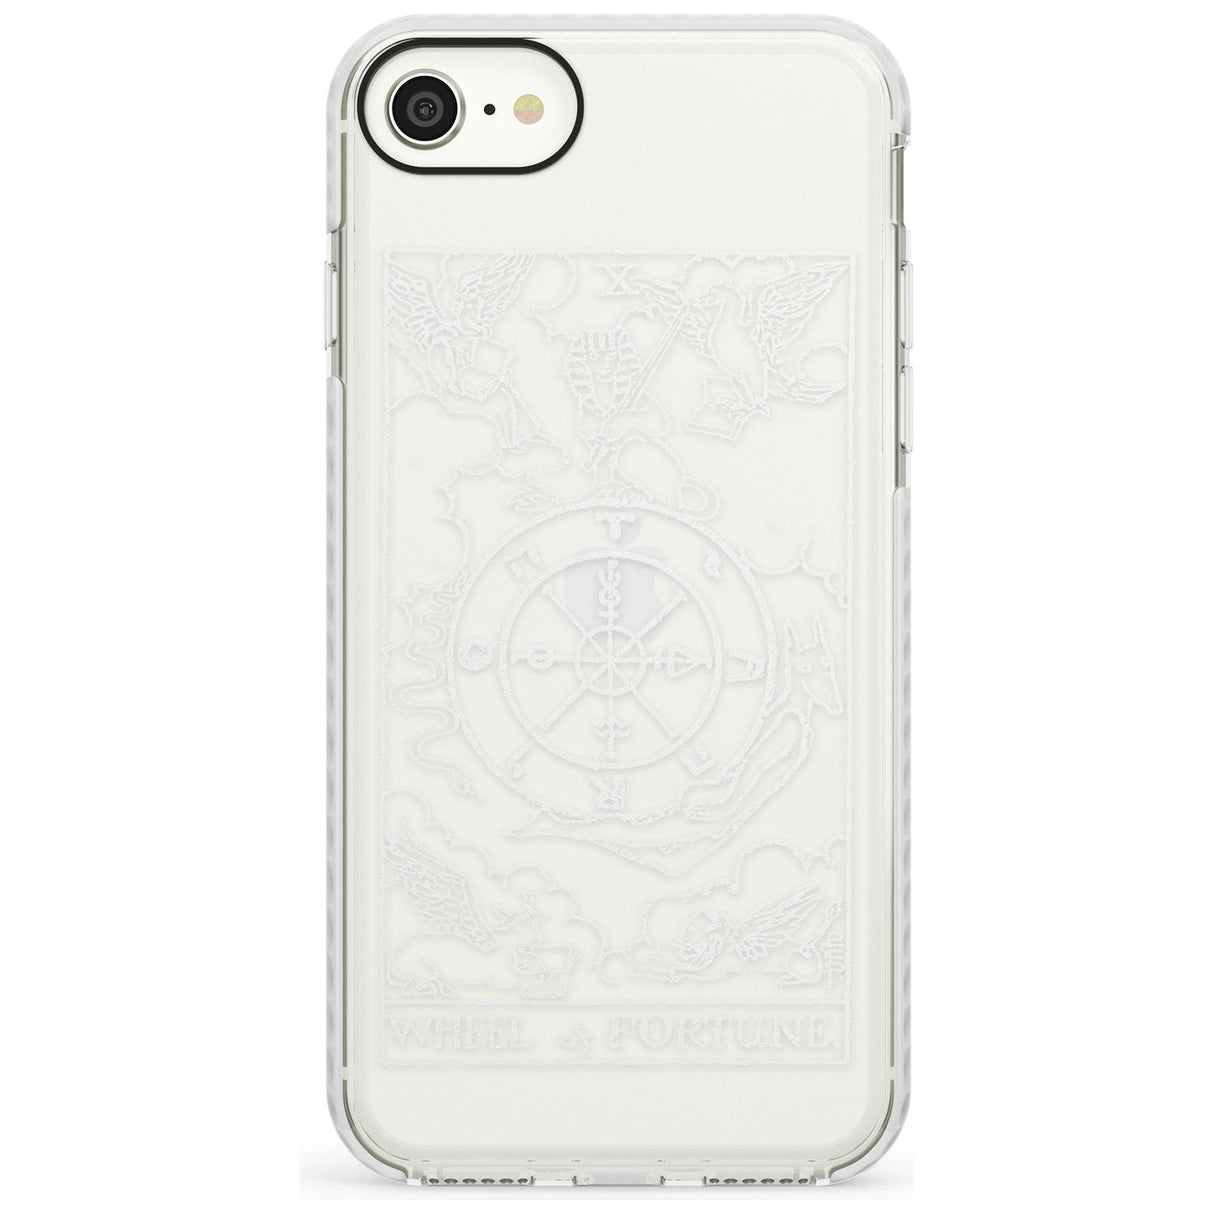 Wheel of Fortune Tarot Card - White Transparent Slim TPU Phone Case for iPhone SE 8 7 Plus